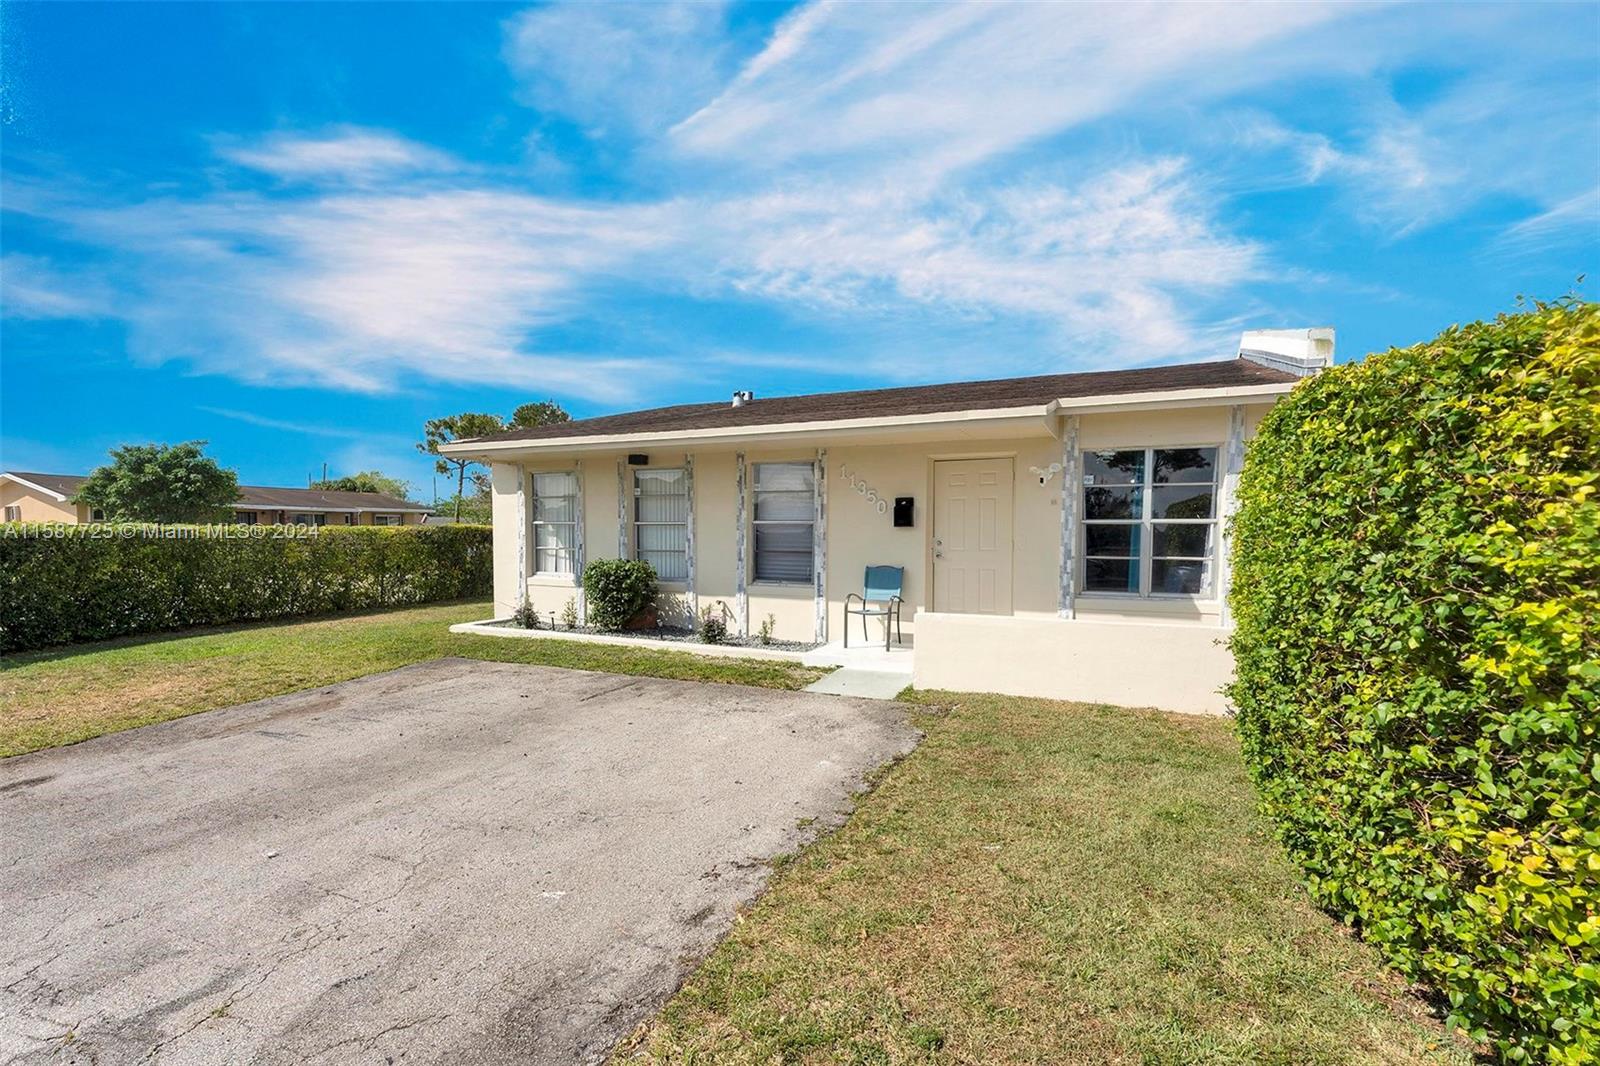 Property for Sale at 11350 Booker T Washington Blvd Blvd, Miami, Broward County, Florida - Bedrooms: 3 
Bathrooms: 2  - $379,999